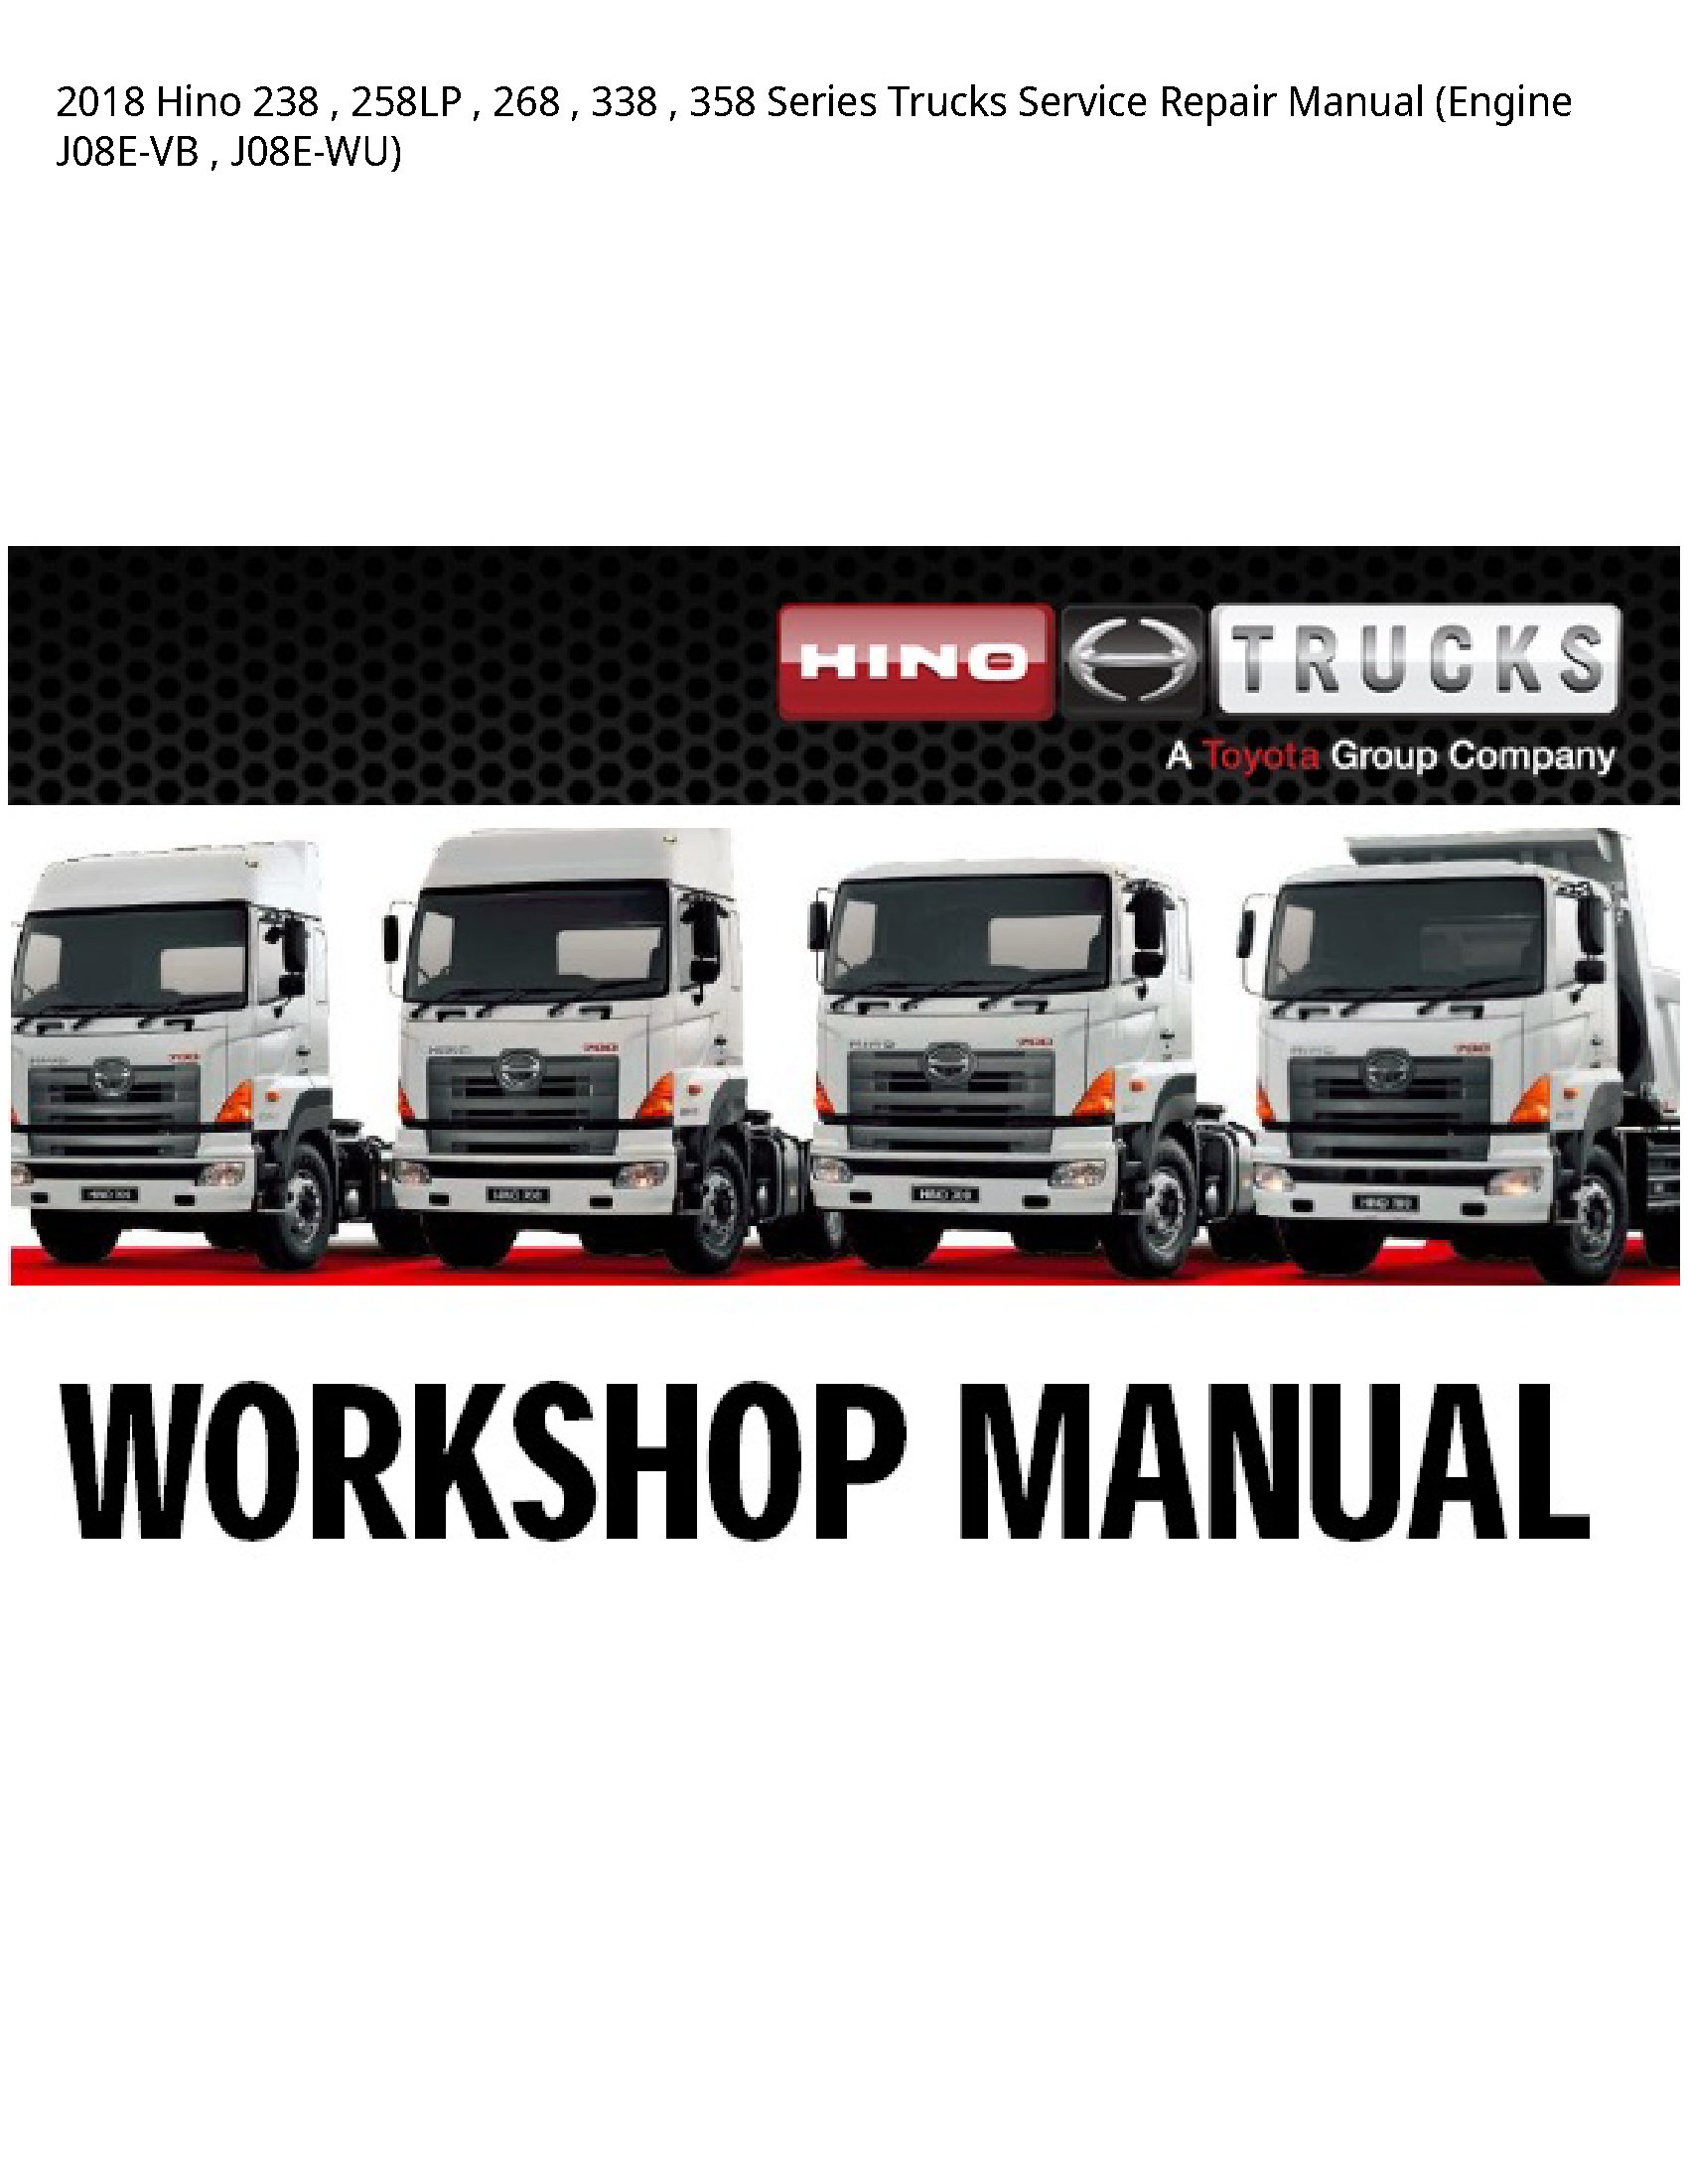 Hino 238 Series Trucks manual